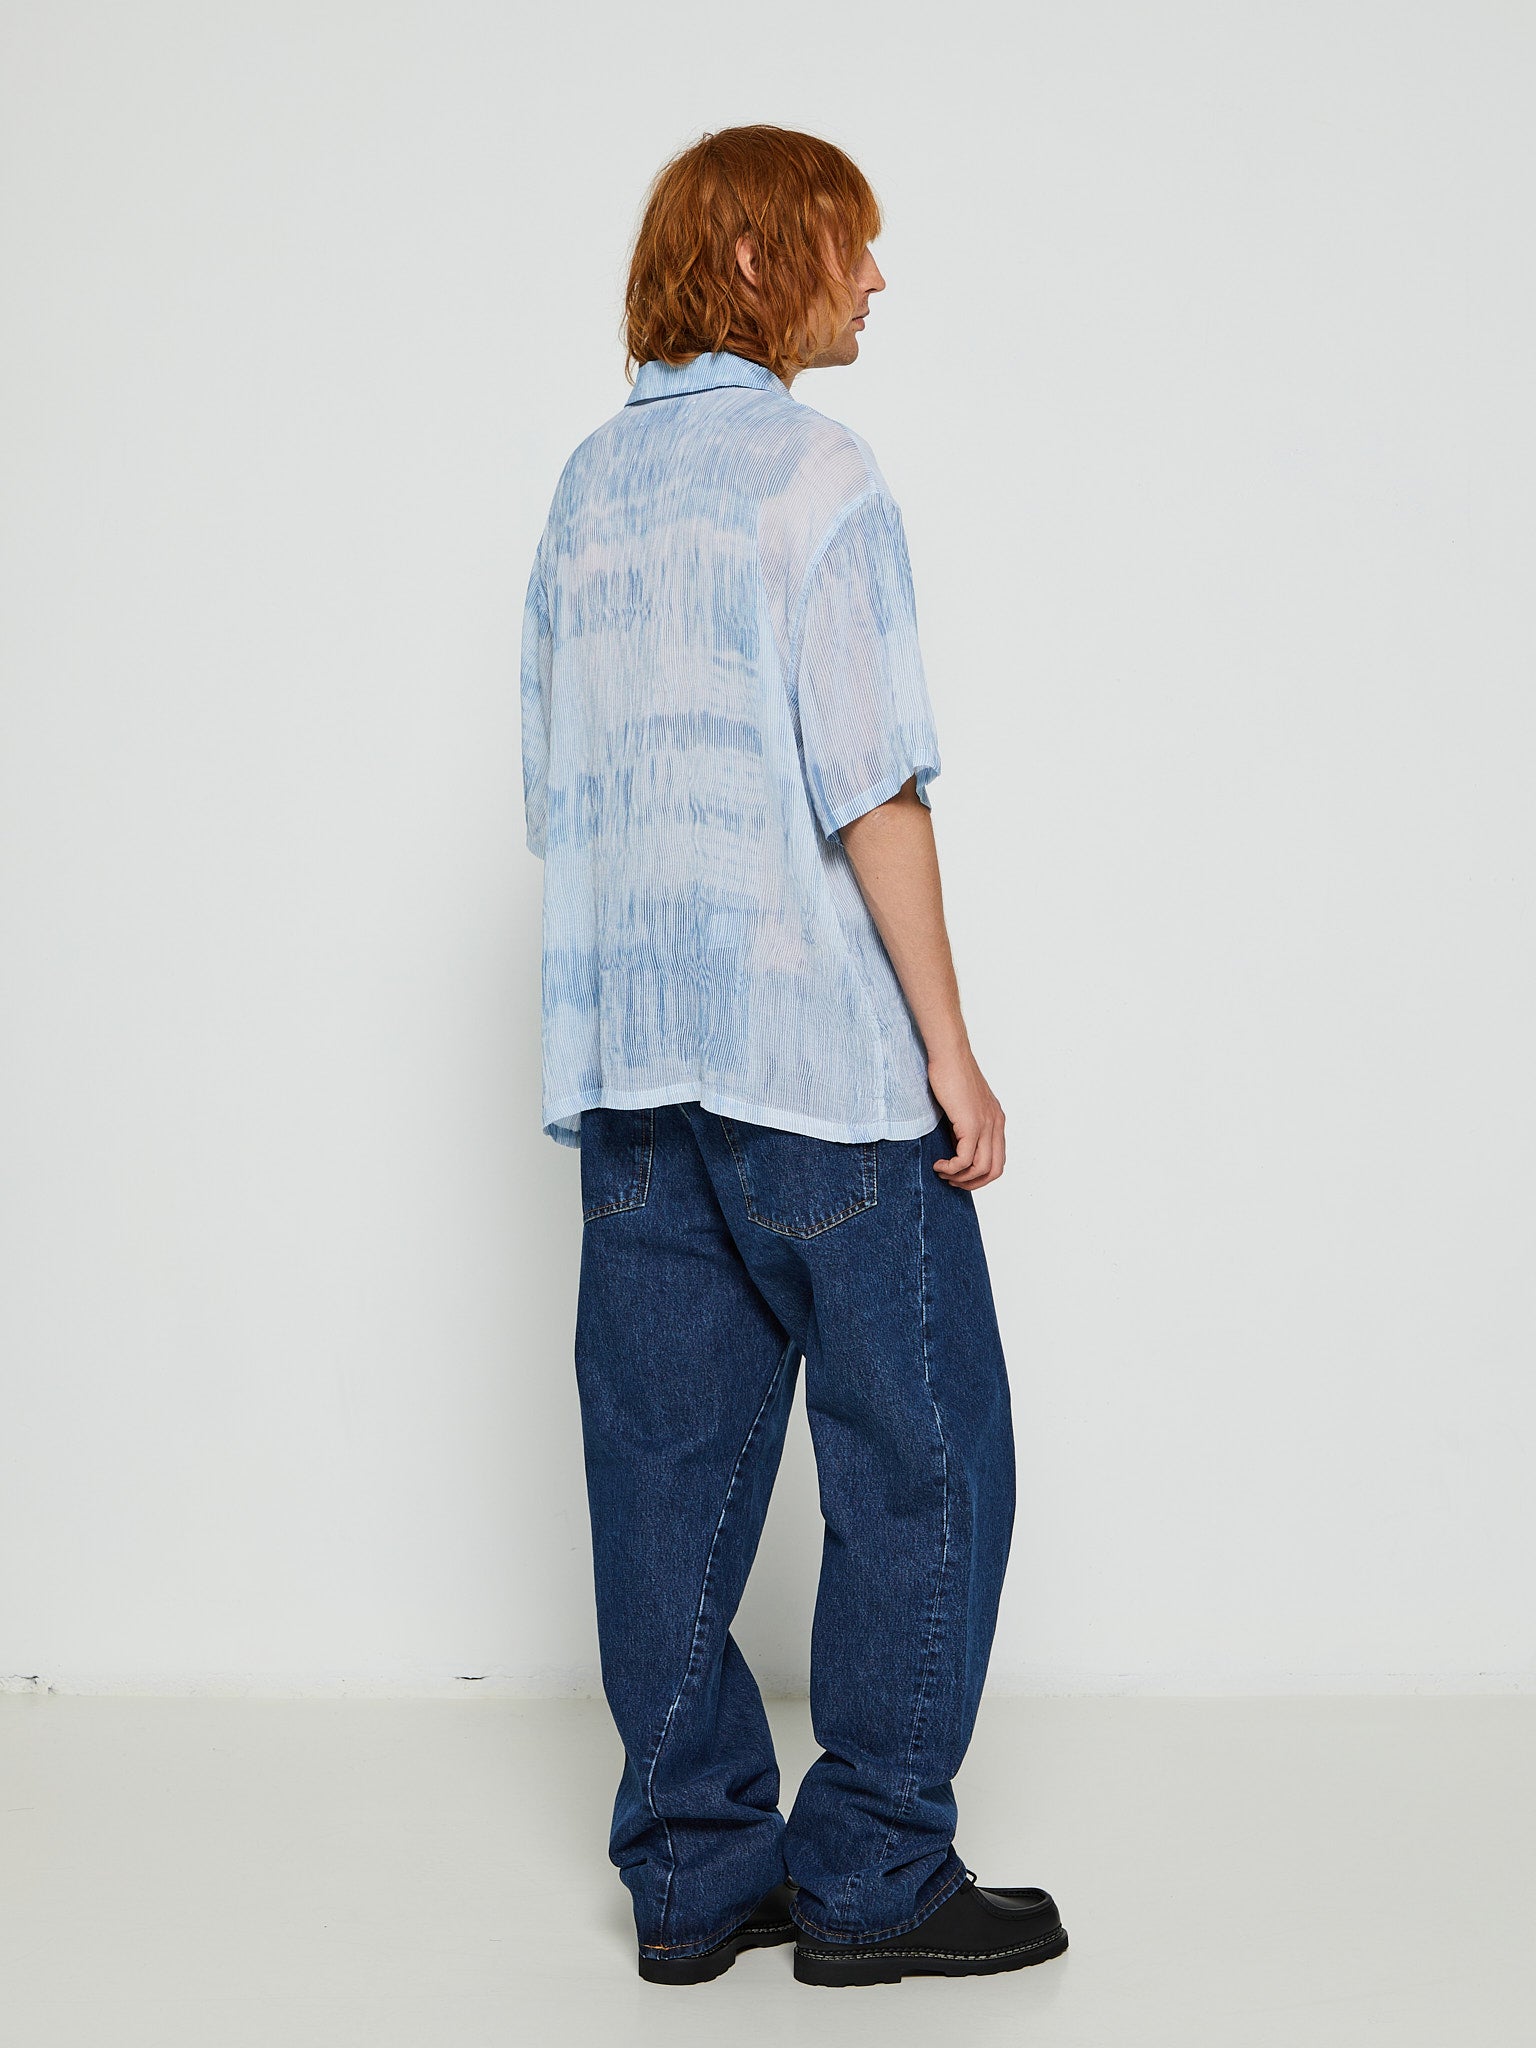 Short Sleeve Box Shirt in Blue Brush Stroke Print